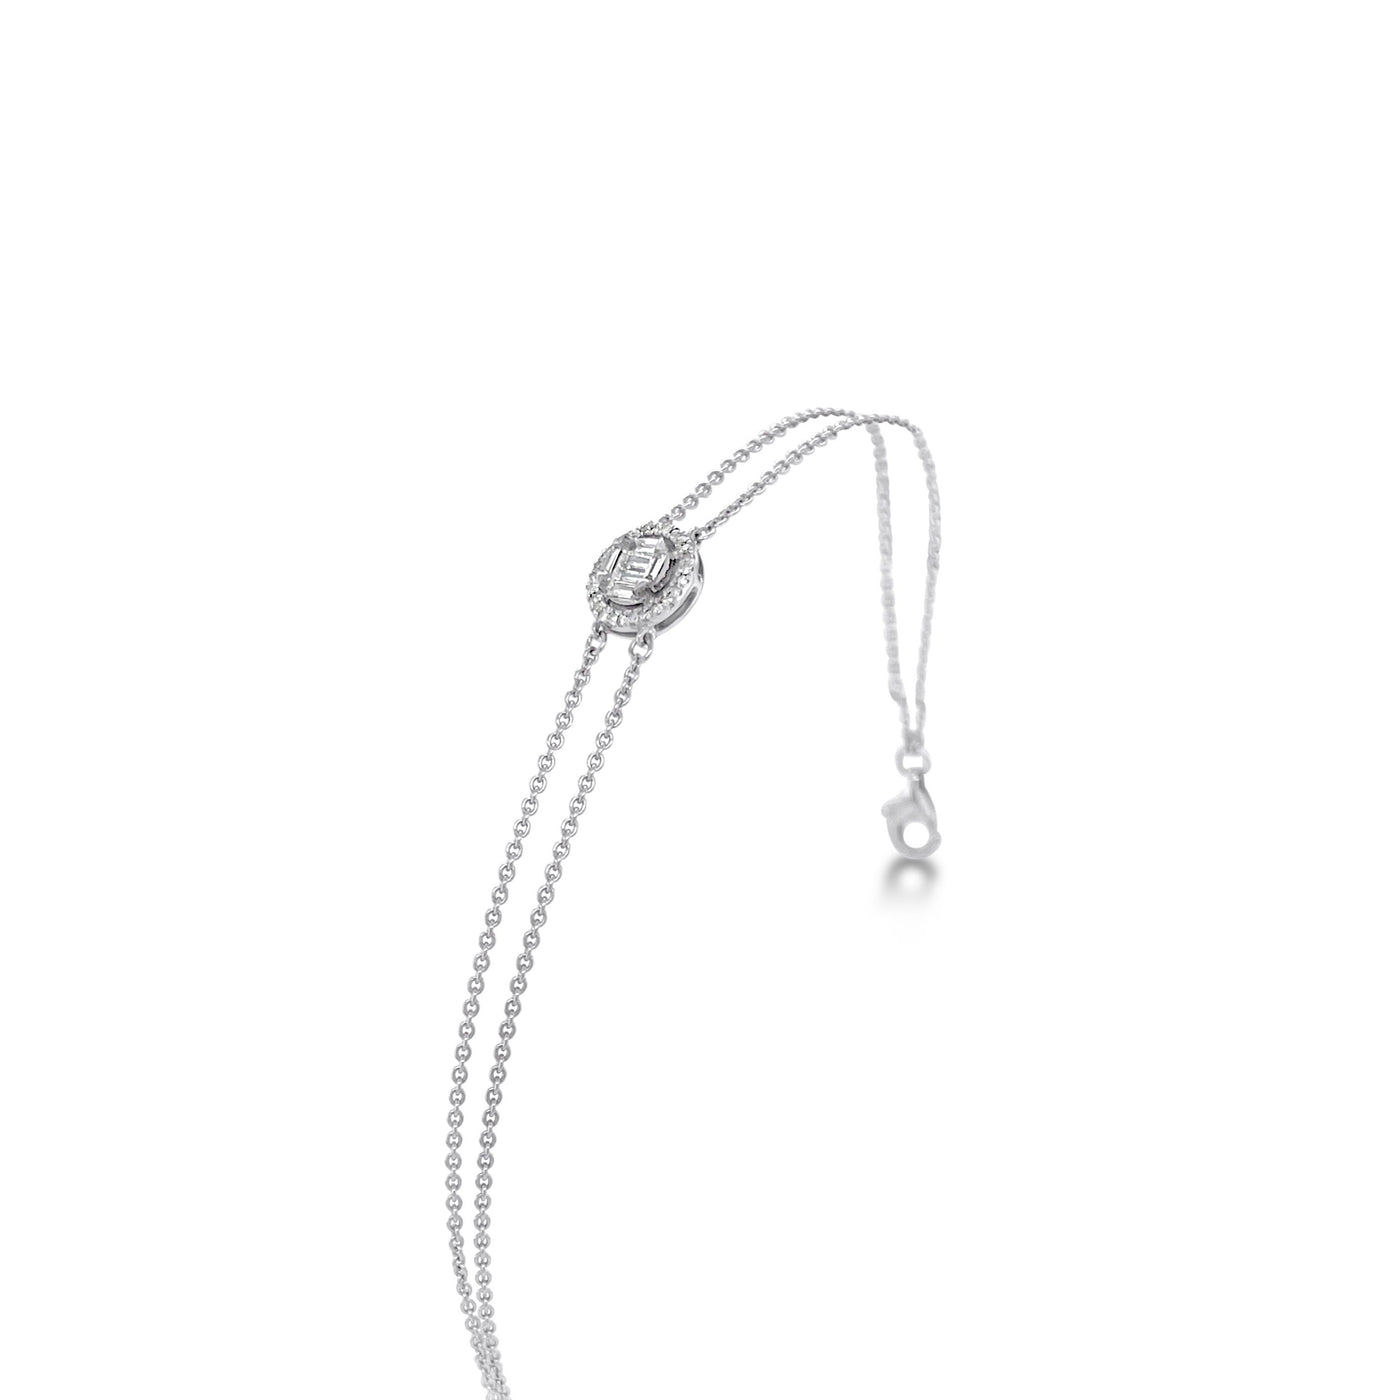 18CT White Gold Diamond Pendant and Bracelet